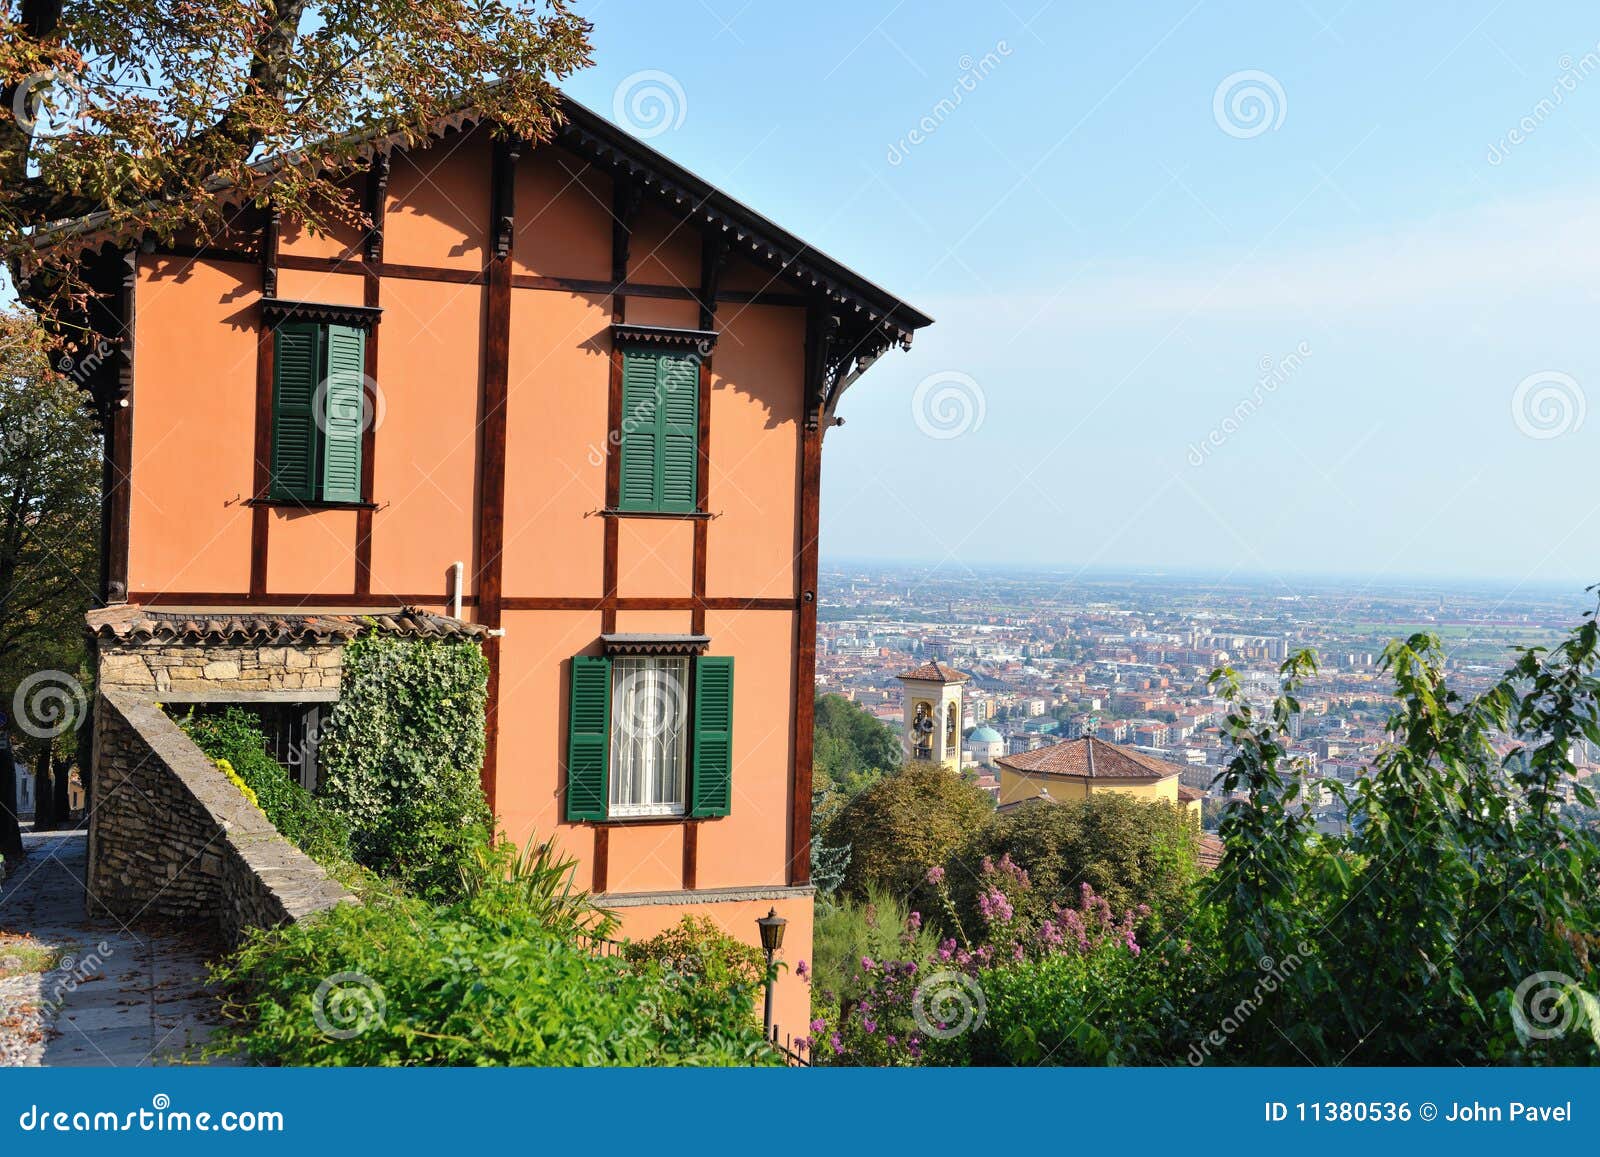 italian villa overlooking bergamo, lombardy, italy